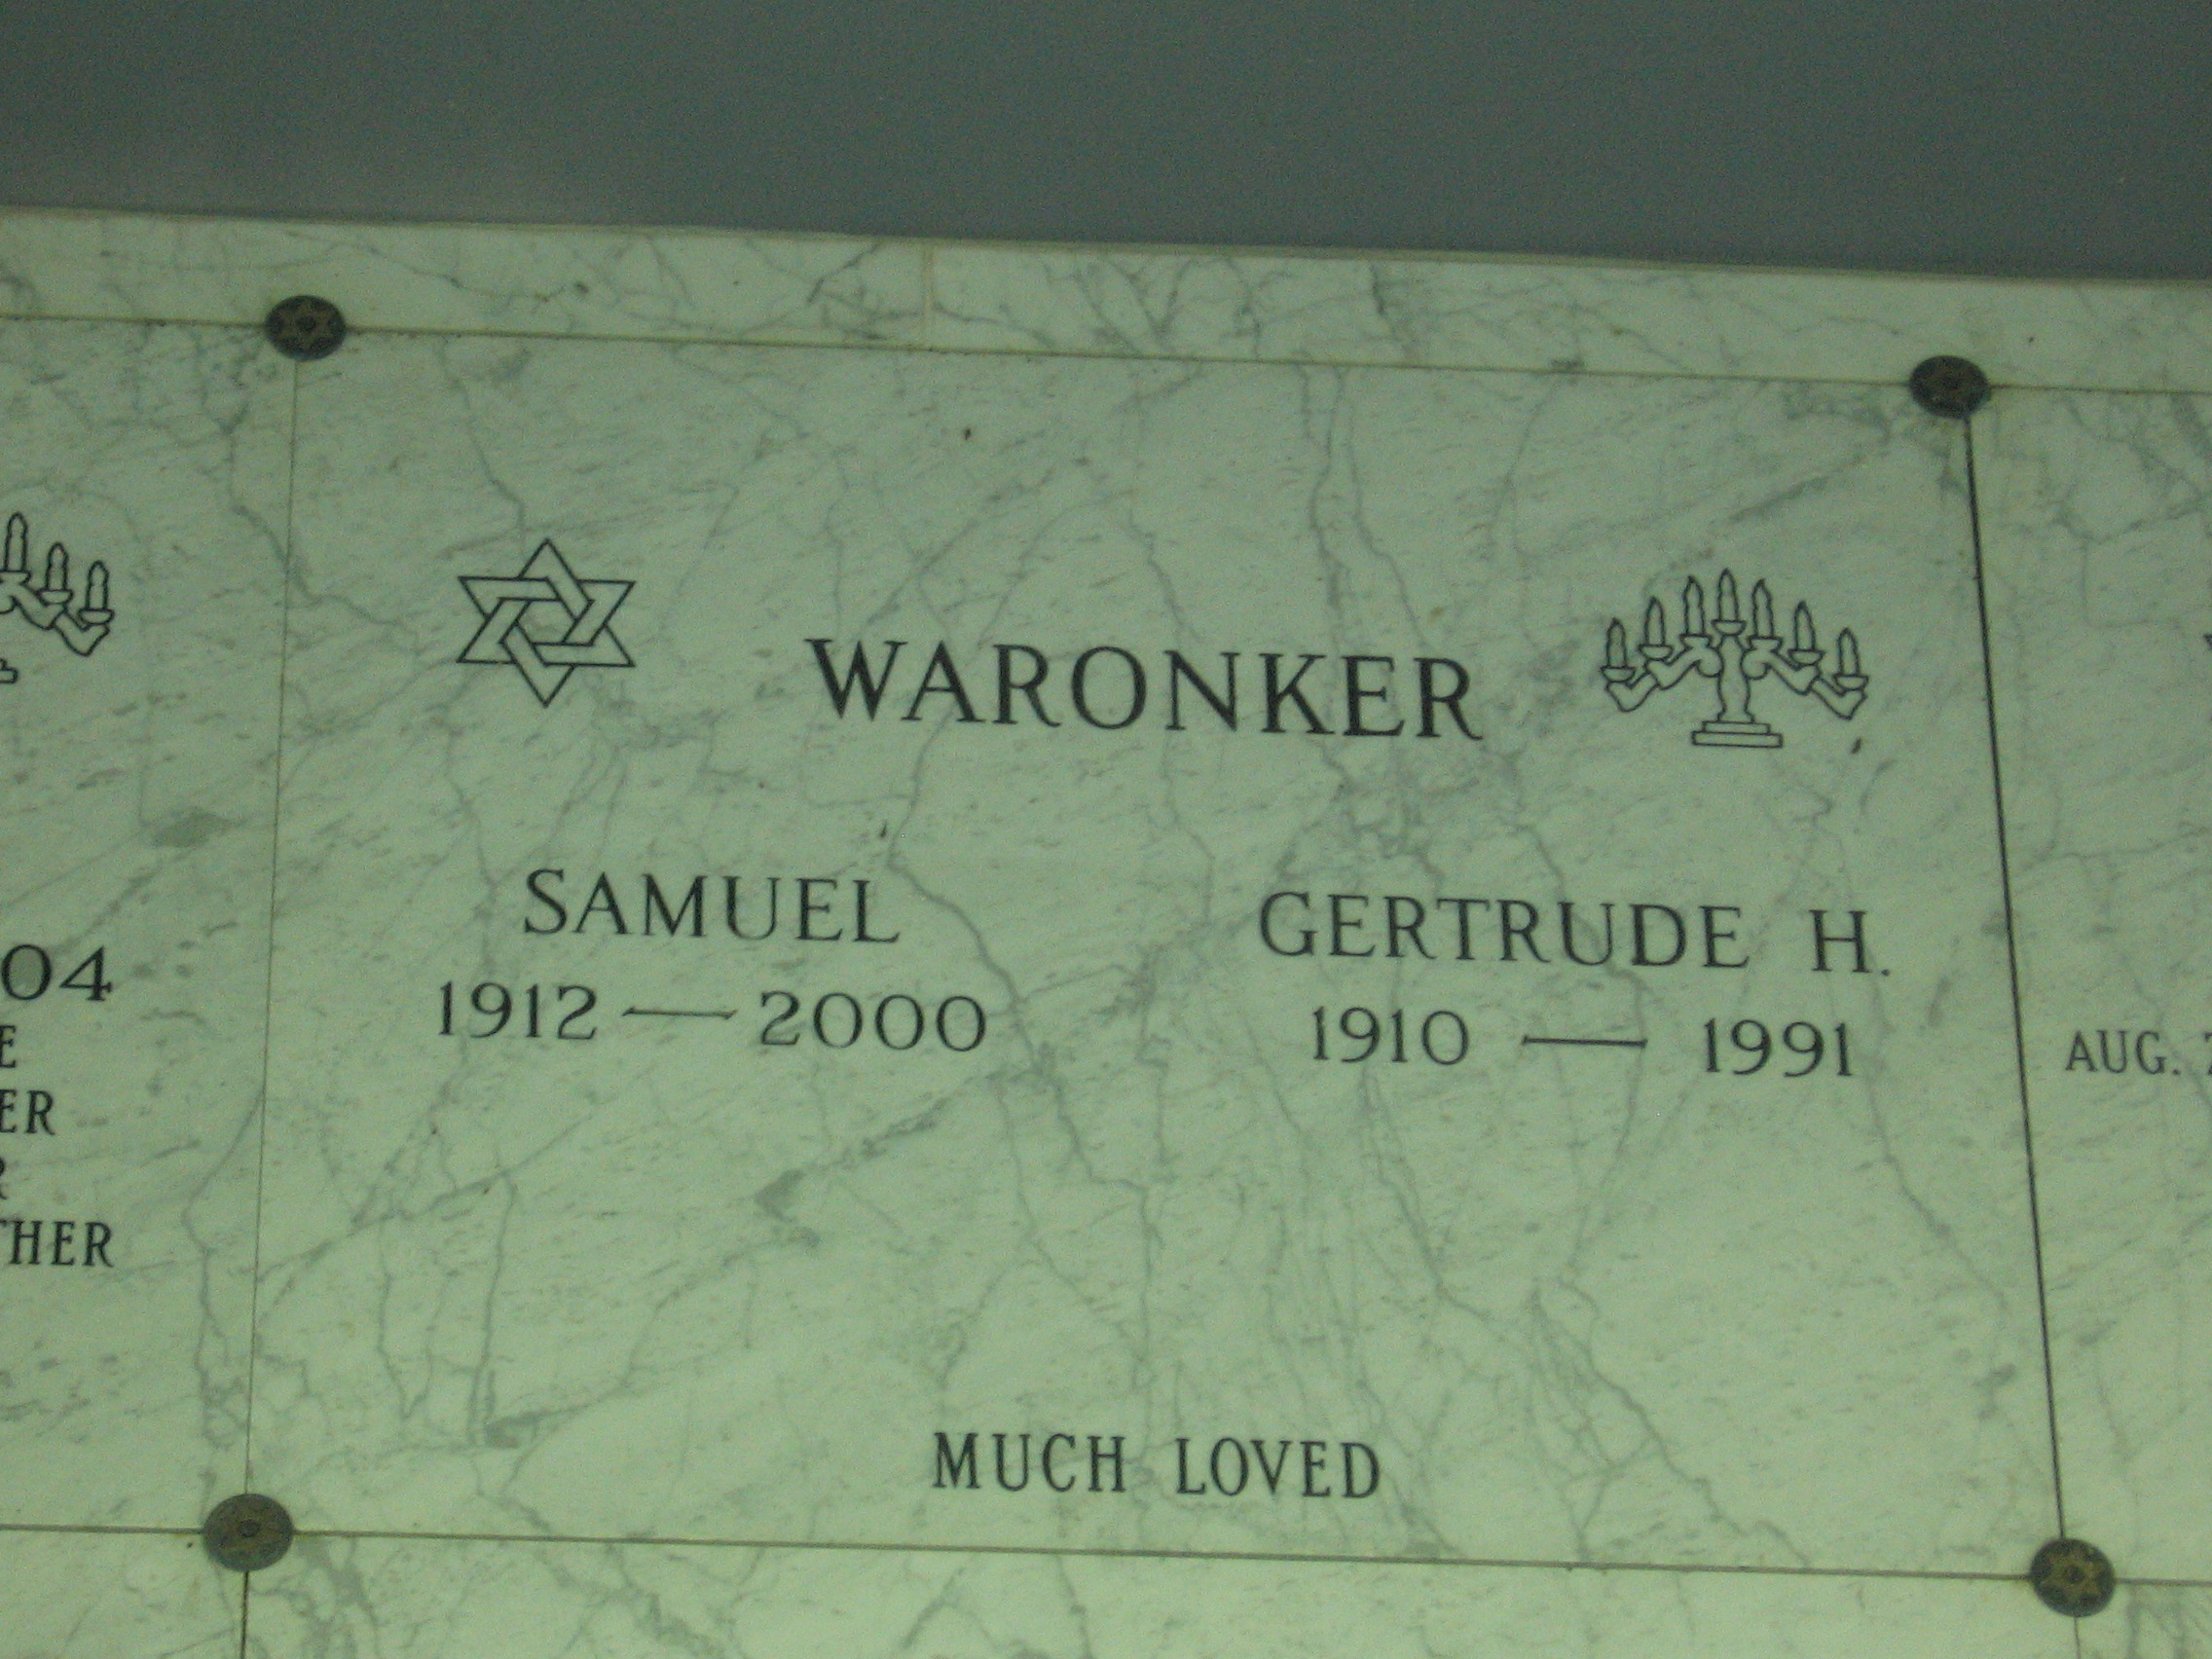 Gertrude H Waronker